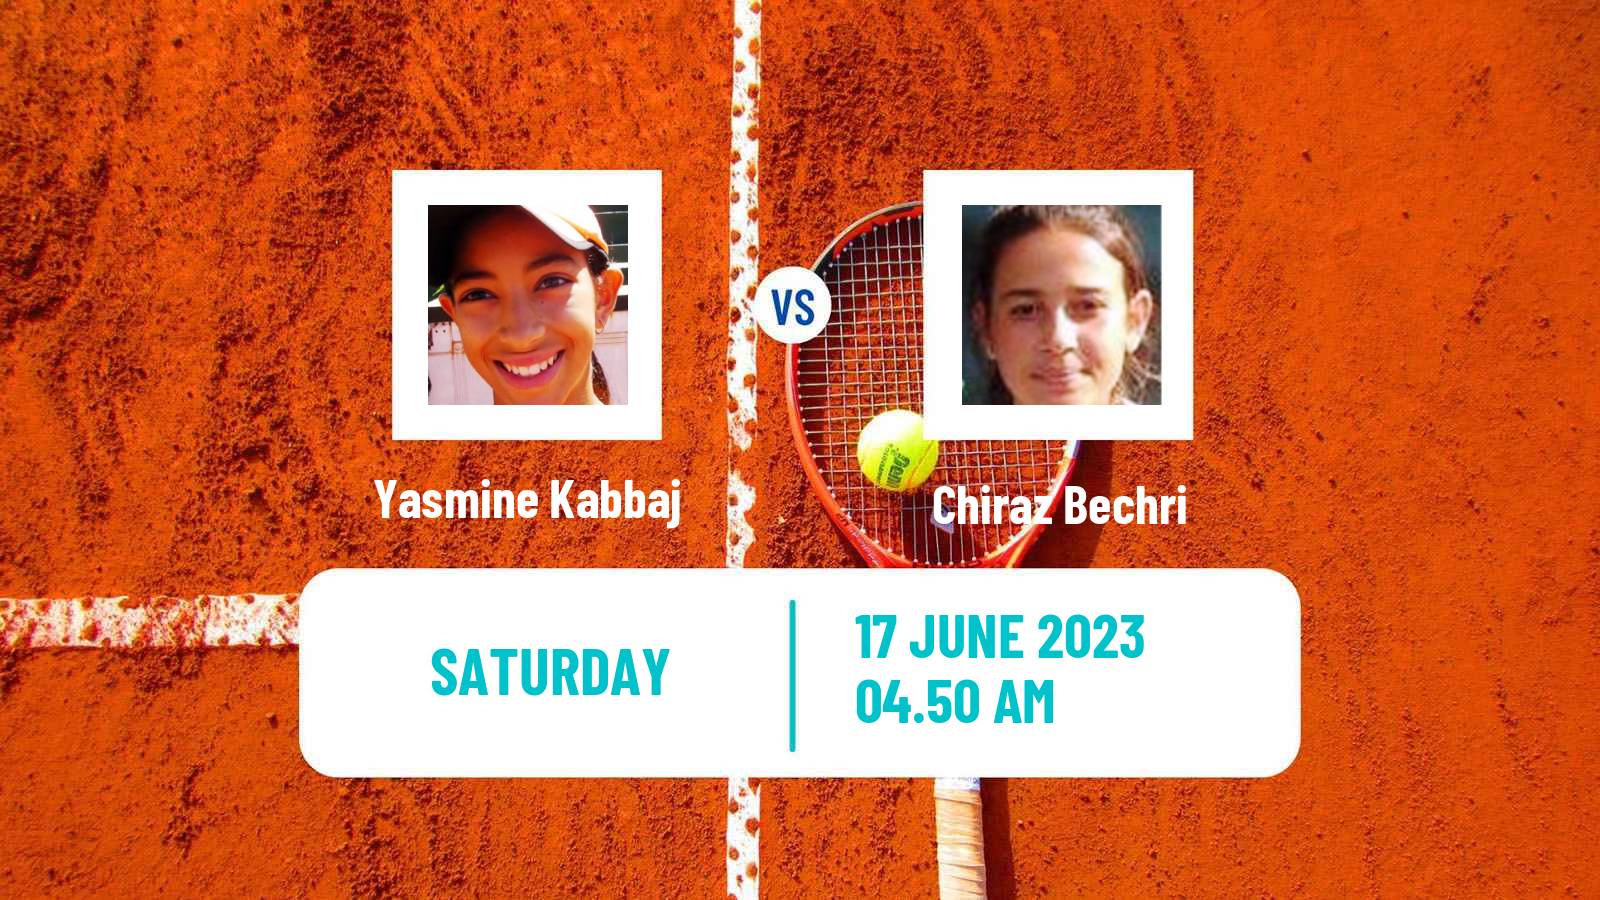 Tennis WTA Billie Jean King Cup Group III Yasmine Kabbaj - Chiraz Bechri